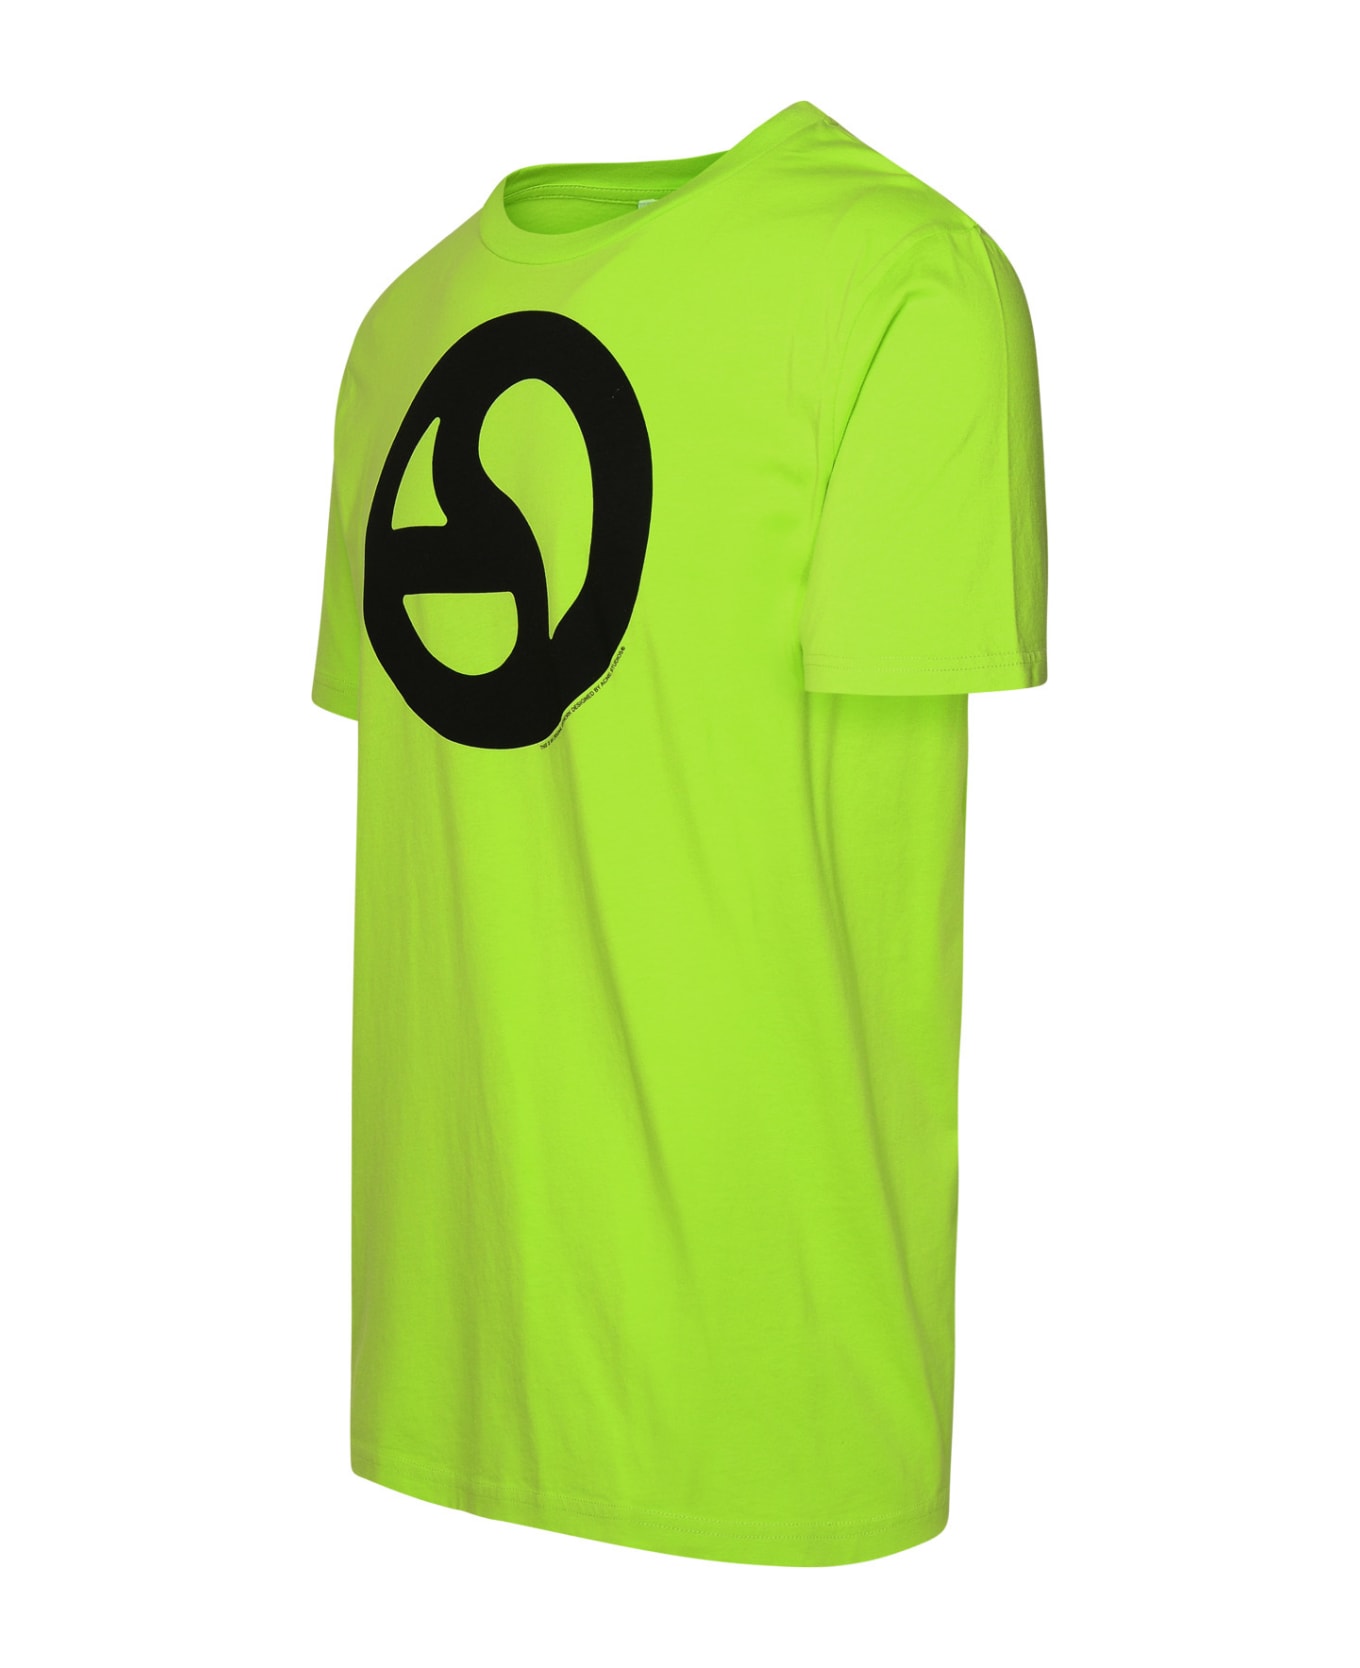 Acne Studios Green Cotton T-shirt - Green Tシャツ